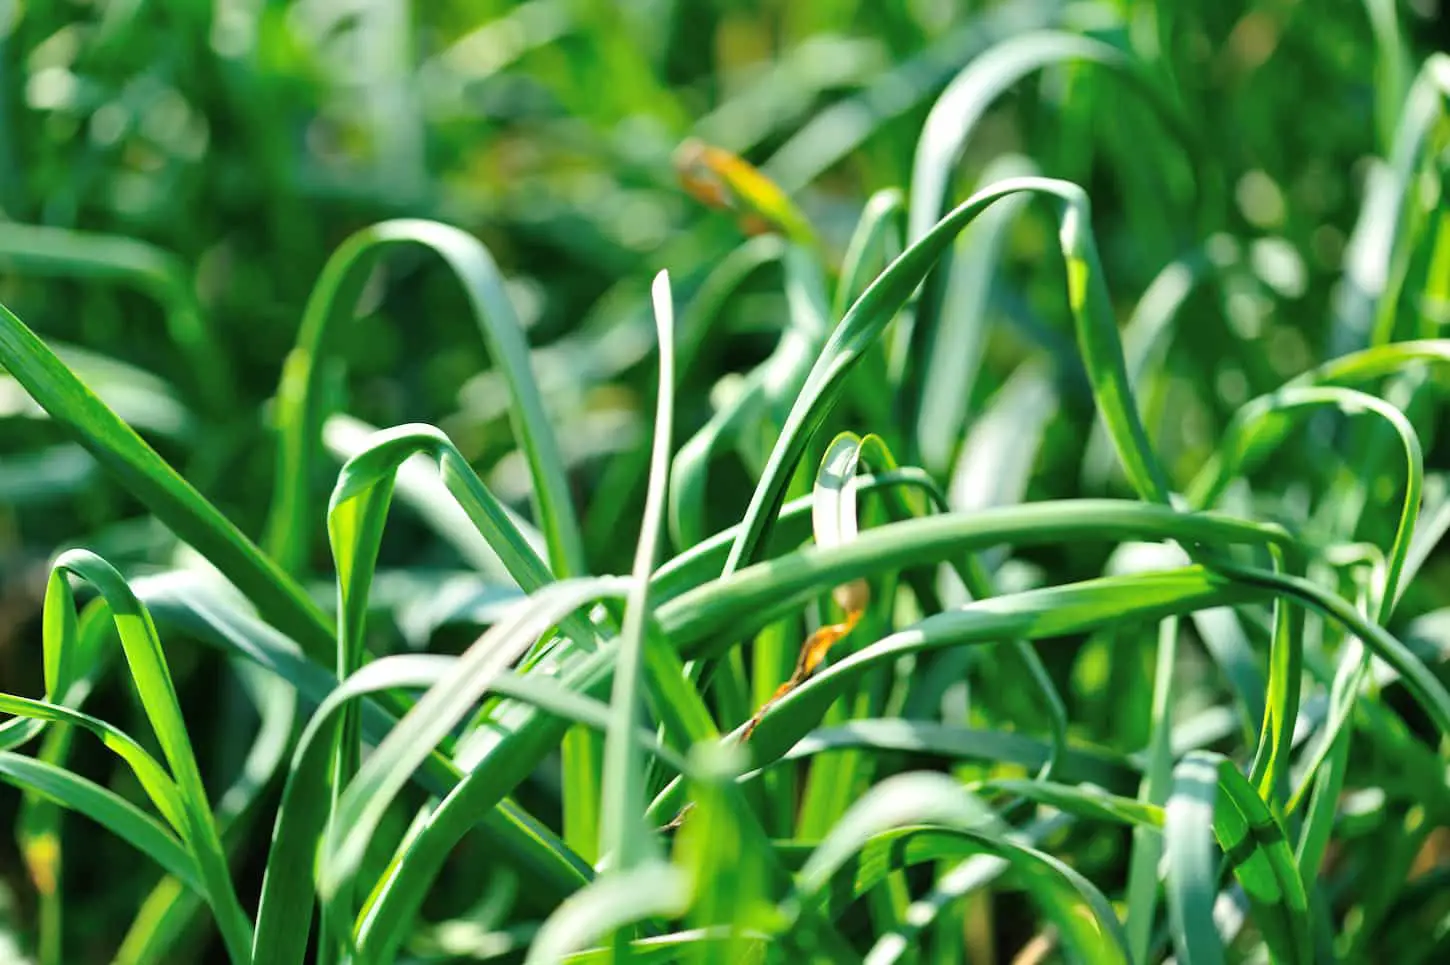 An image of garlic crops in the garden.